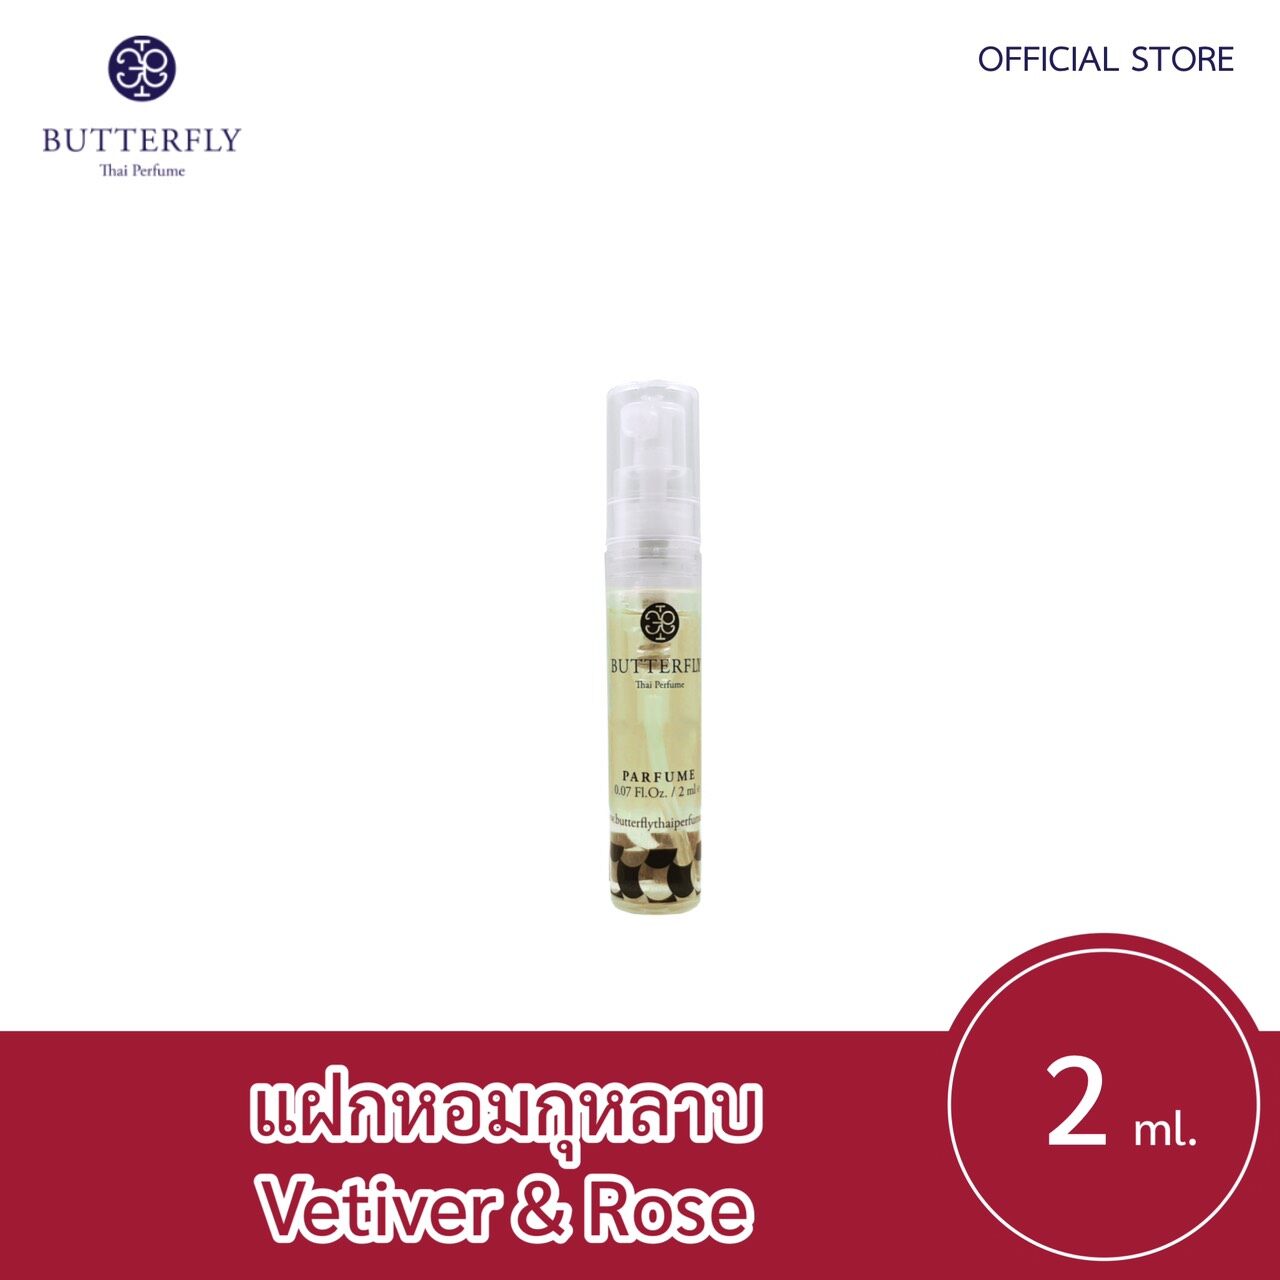 Butterfly Thai Perfume - น้ำหอมบัตเตอร์ฟลาย ไทย เพอร์ฟูม  ขนาดทดลอง 2ml.  กลิ่น แฝกหอมกุหลาบปริมาณ (มล.) 2